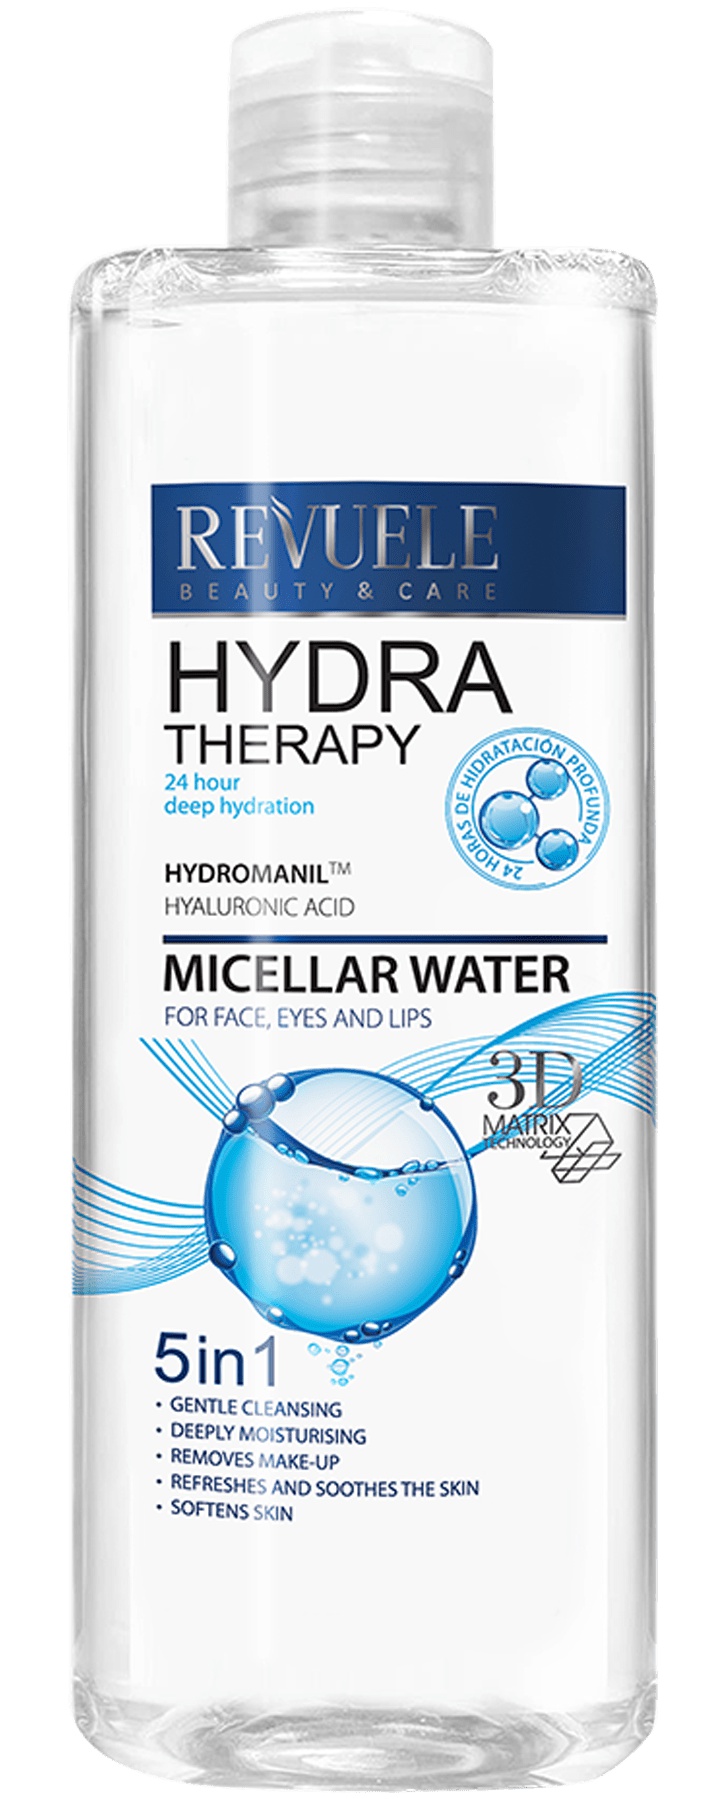 Revuele Hydra Therapy Micellar Water